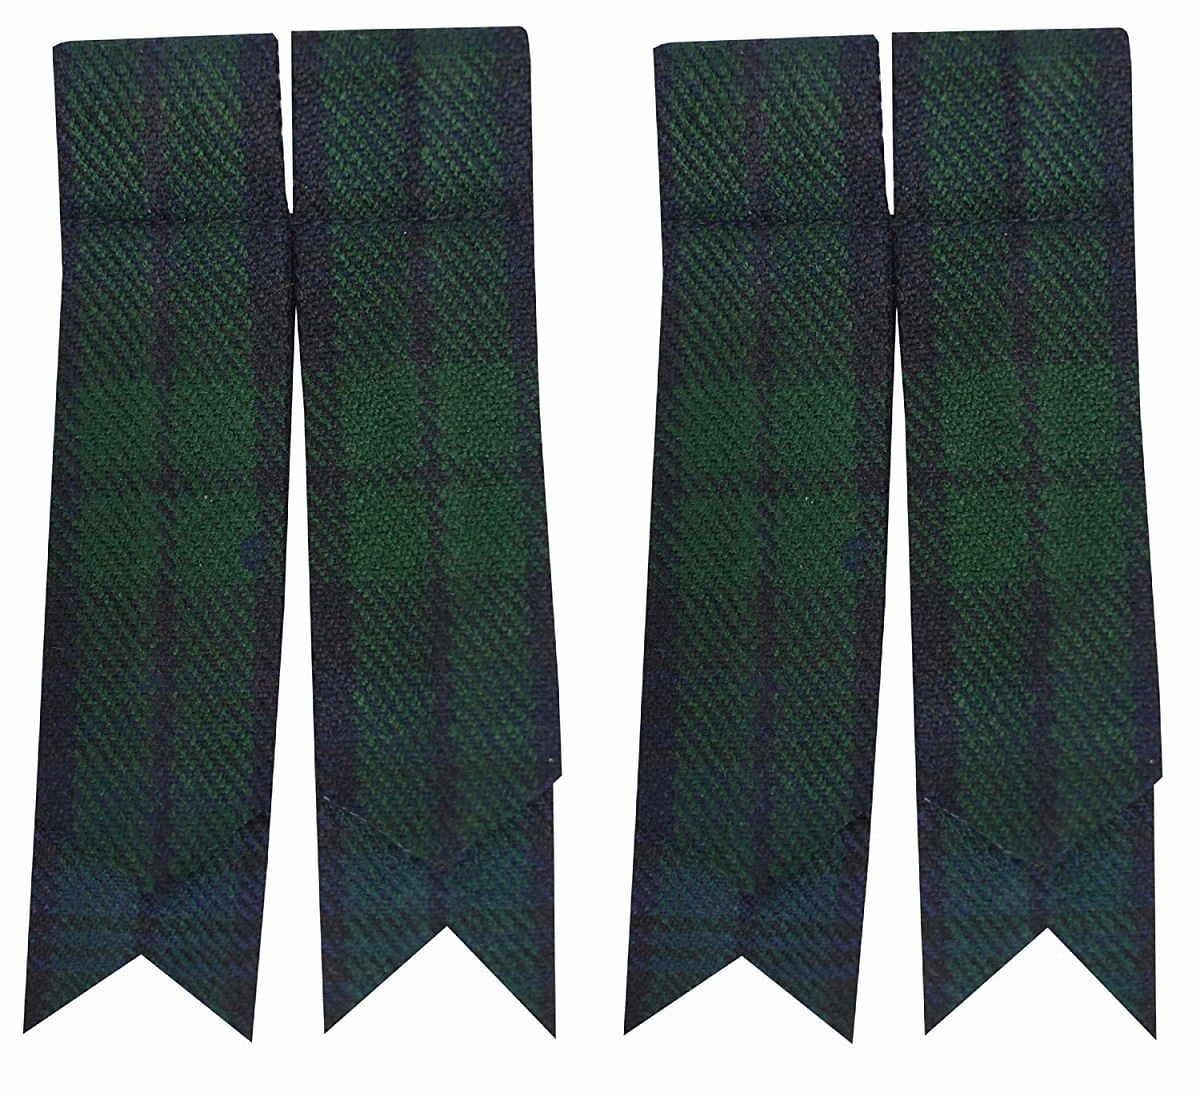 Scottish Men’s Kilt Sock Flashes Various Tartans Highland Kilt Hose Flashes Pointed - #Kilts Boutique#